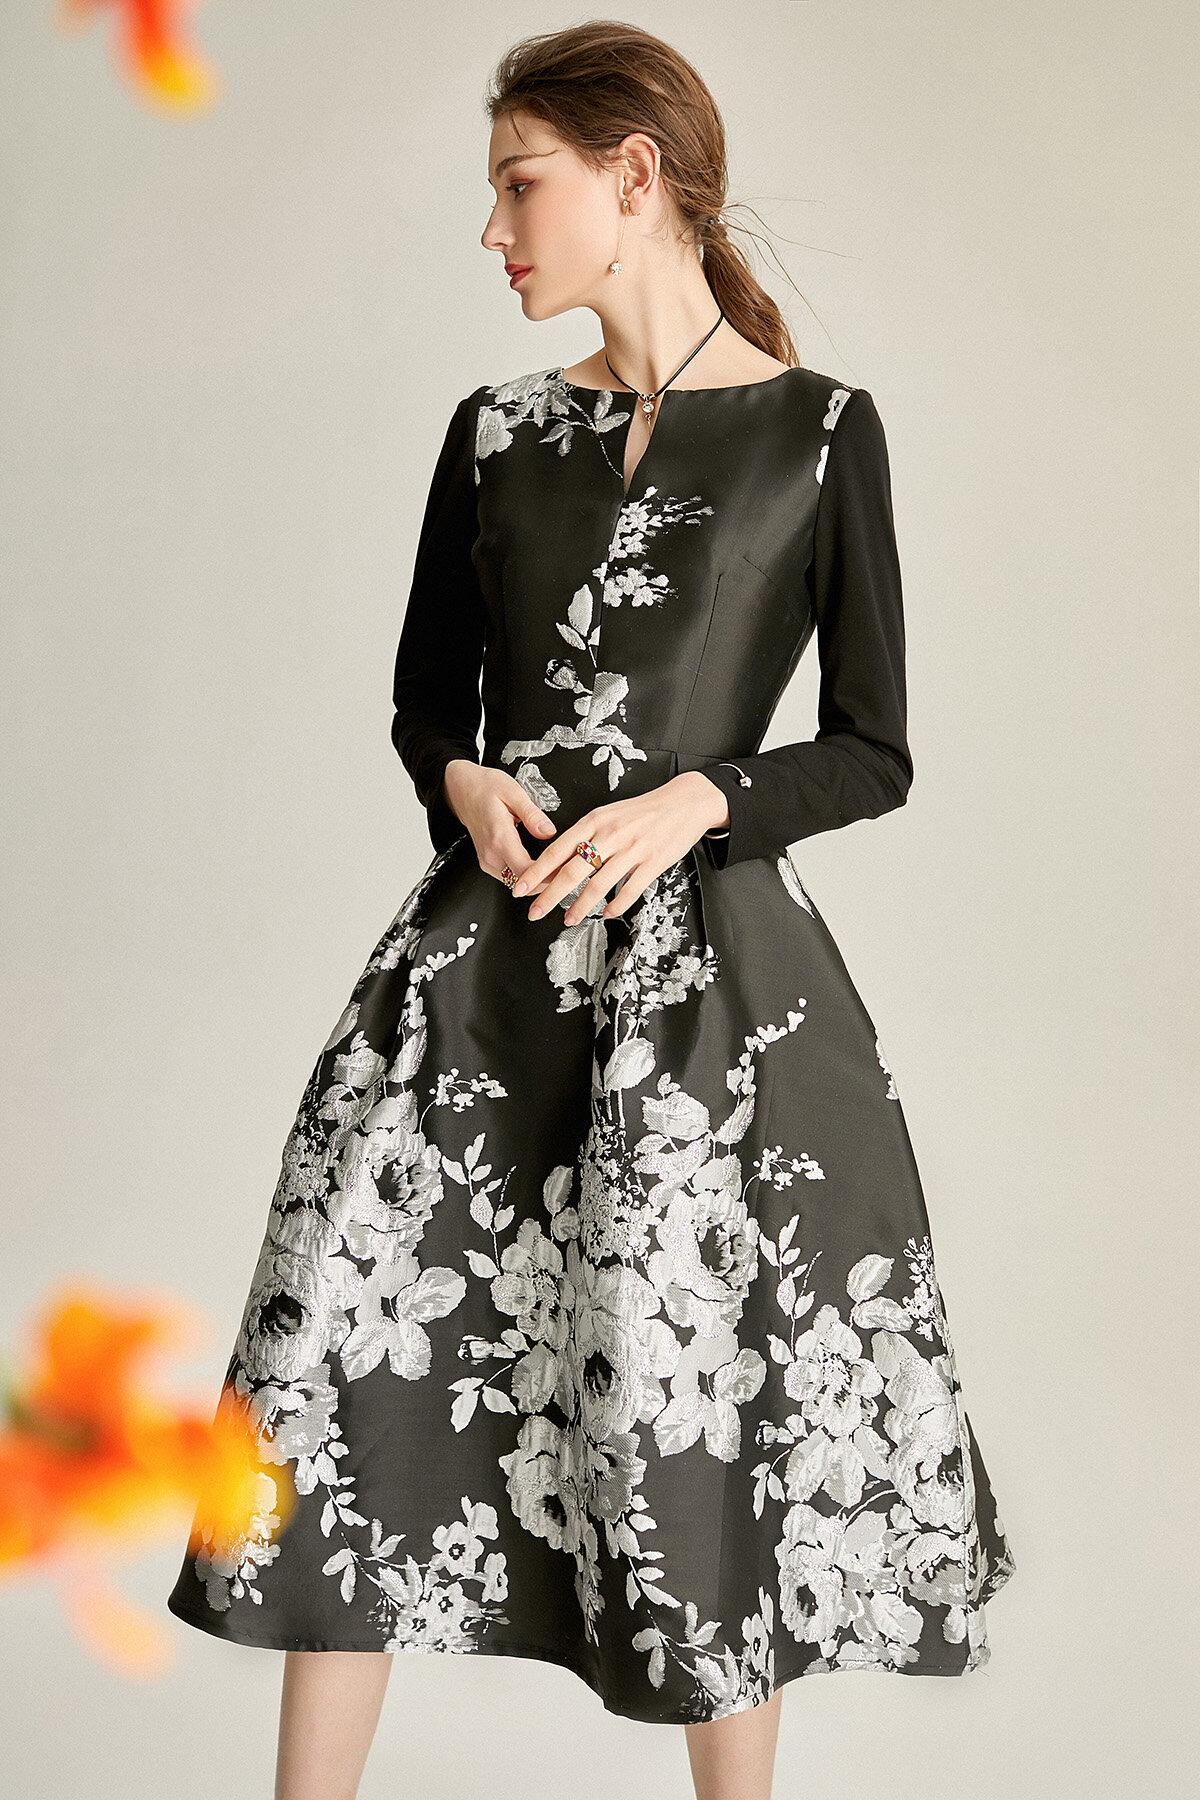 Spring retro 1950 lbd black jacquard long sleeve wedding guest audrey hepburn dress - Bailey